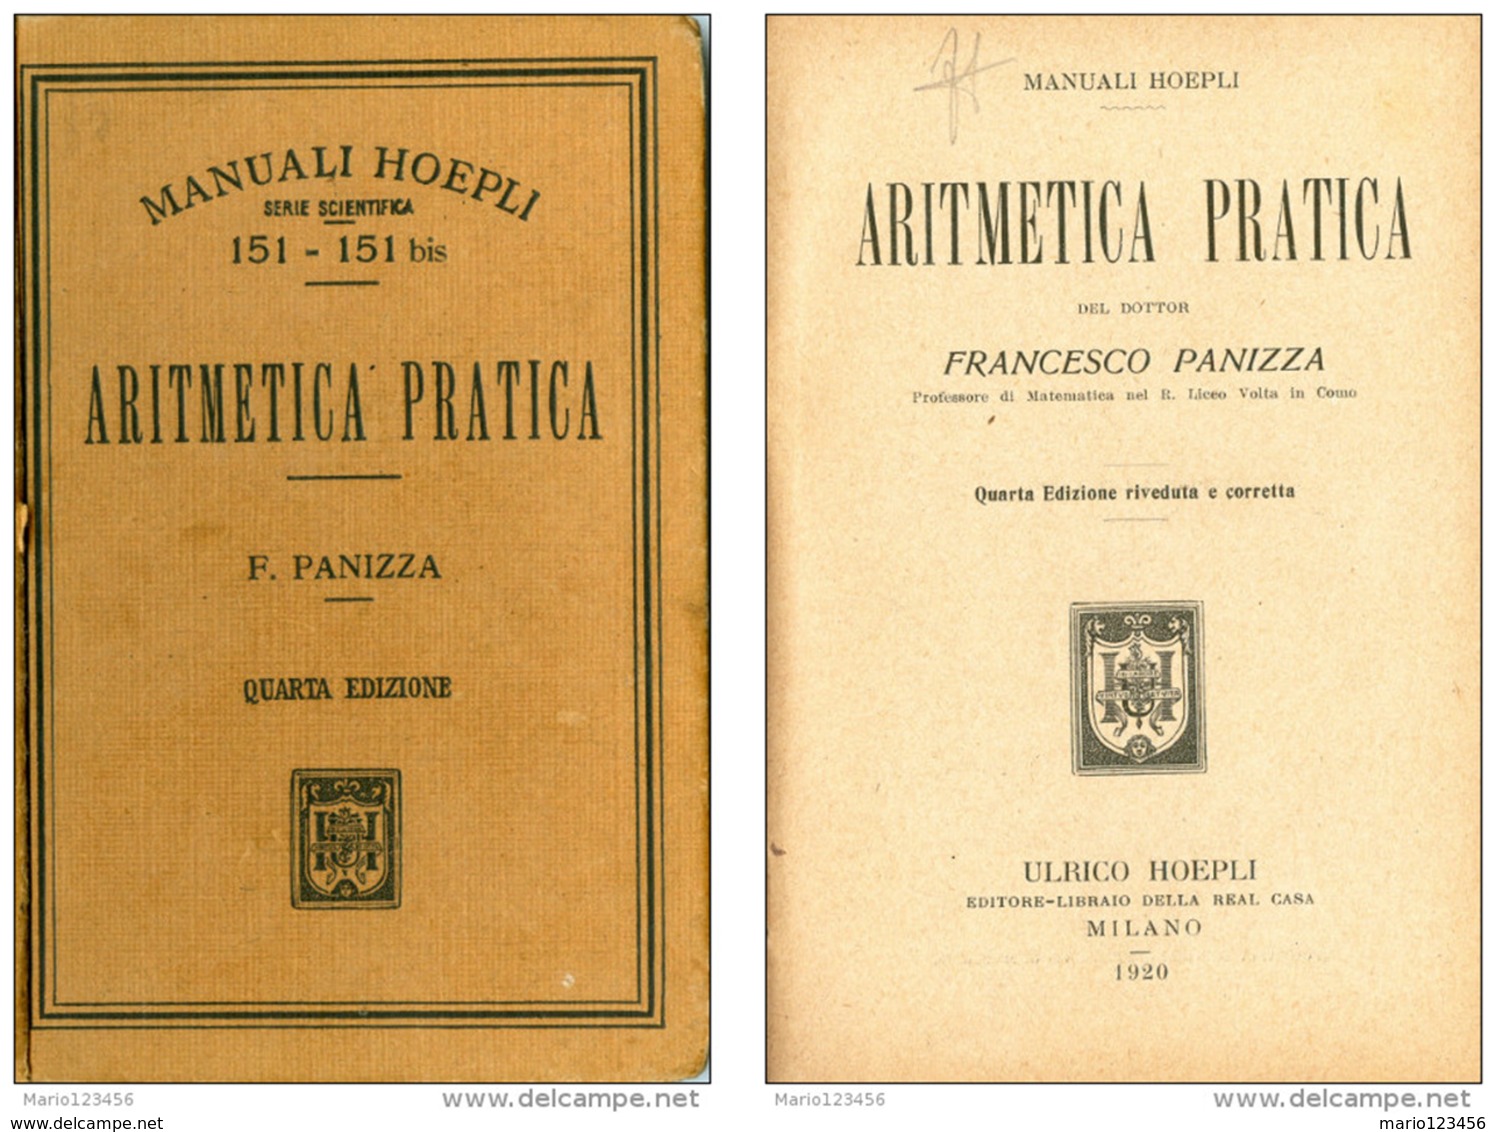 MANUALE HOEPLI, ARITMETICA PRATICA, FRANCESCO PANIZZA, QUARTA EDIZIONE, 1920 - Matematica E Fisica